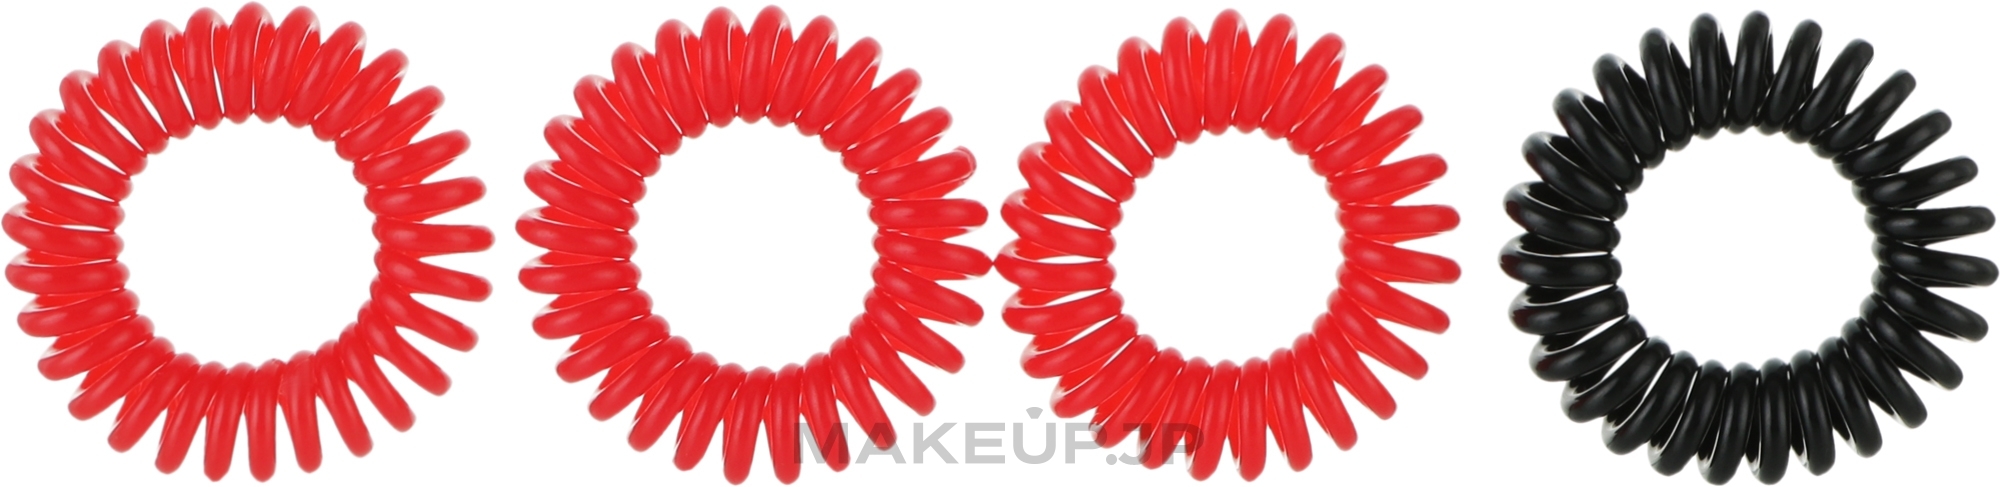 Elastic Hair Bands, red+black, 4 pcs - Hair Springs — photo 4 szt.